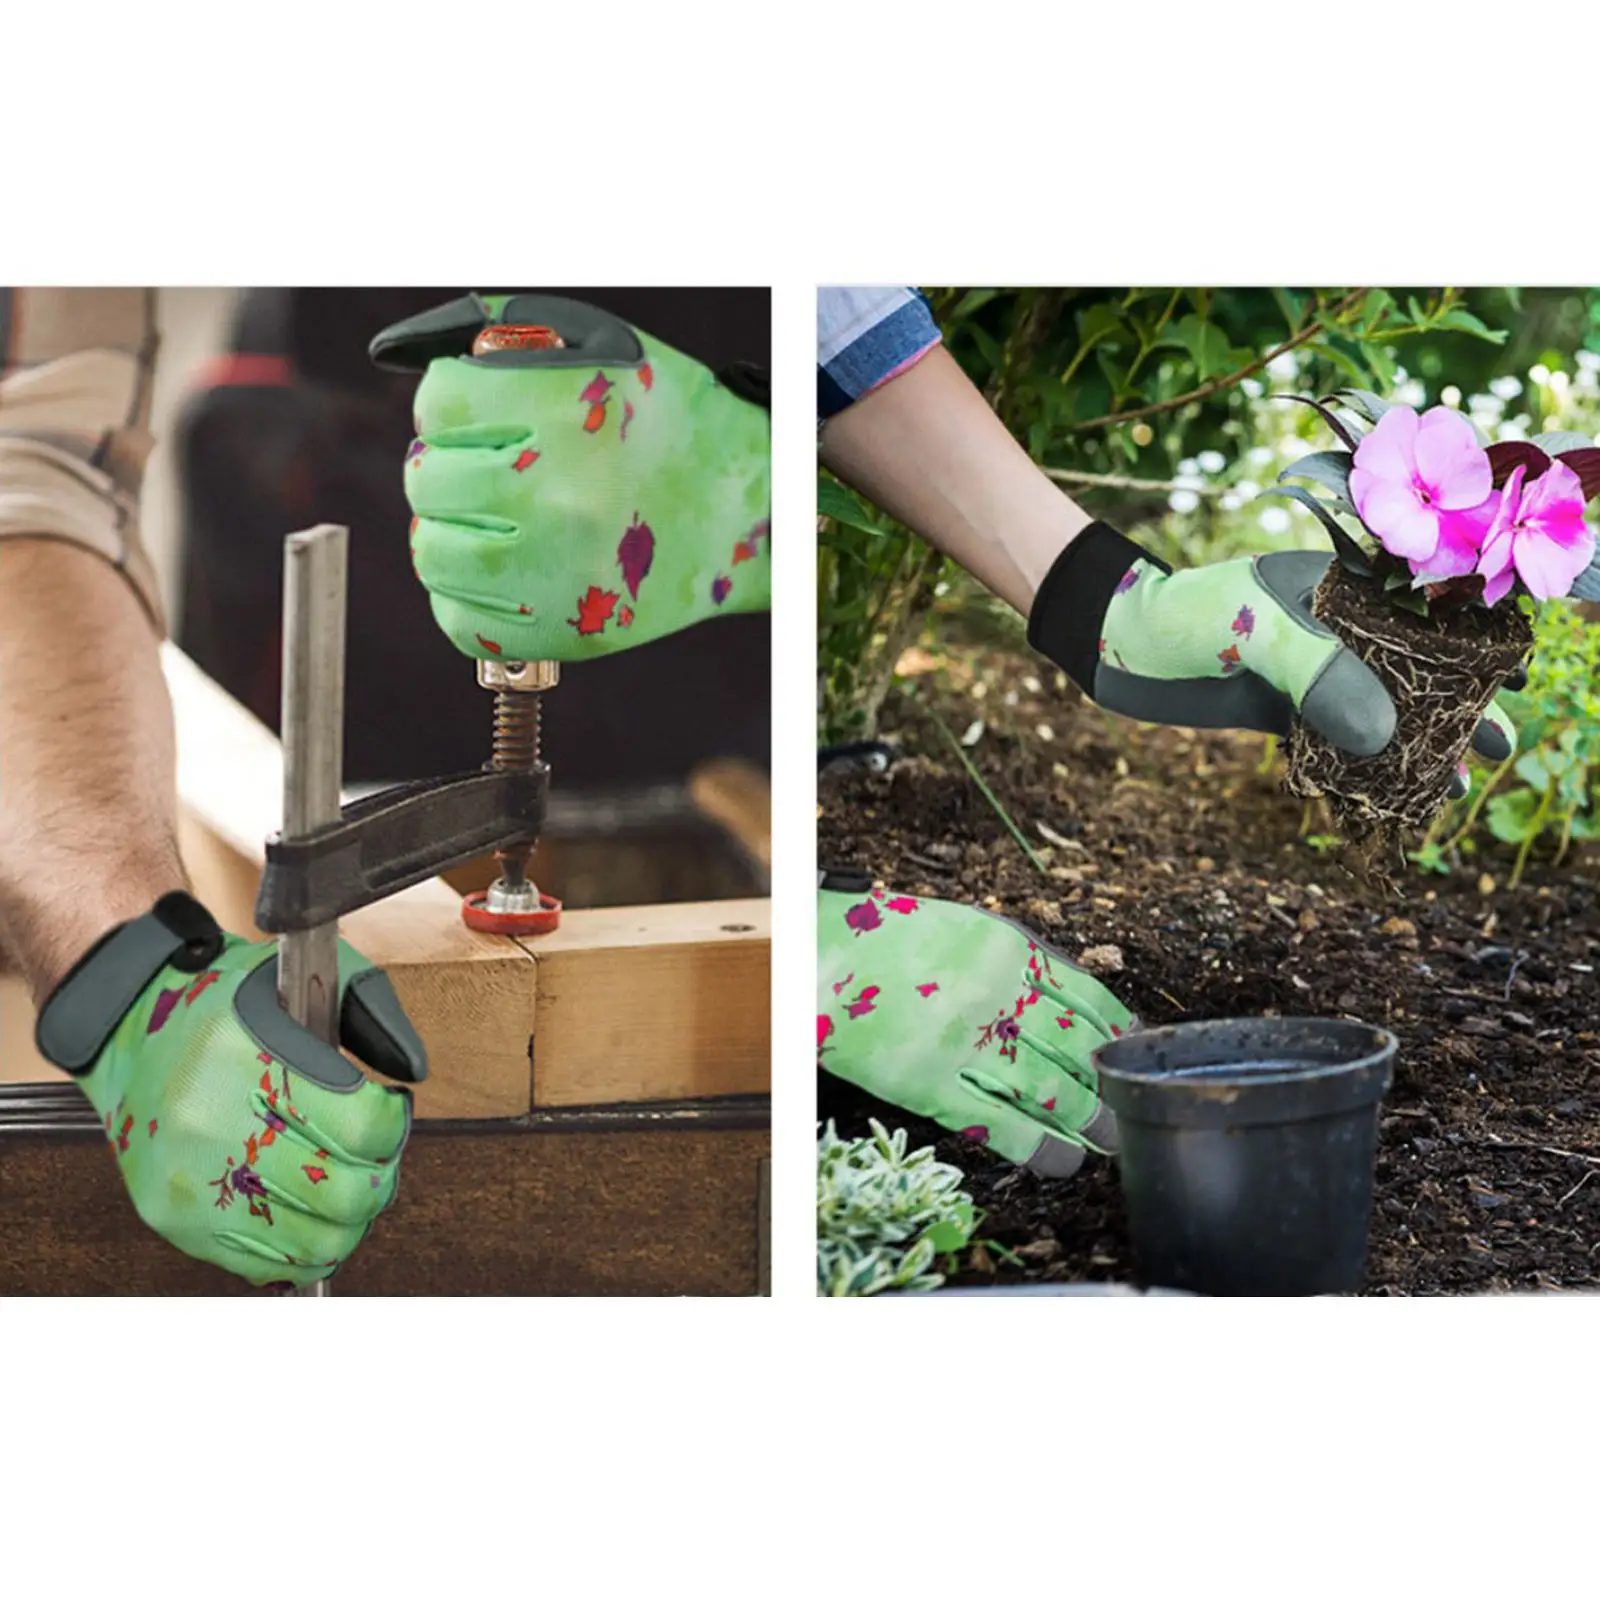 Leather Gardening Gloves for Women Men Protective Work Gloves Breathability Resistance Garden Yard Working Gloves